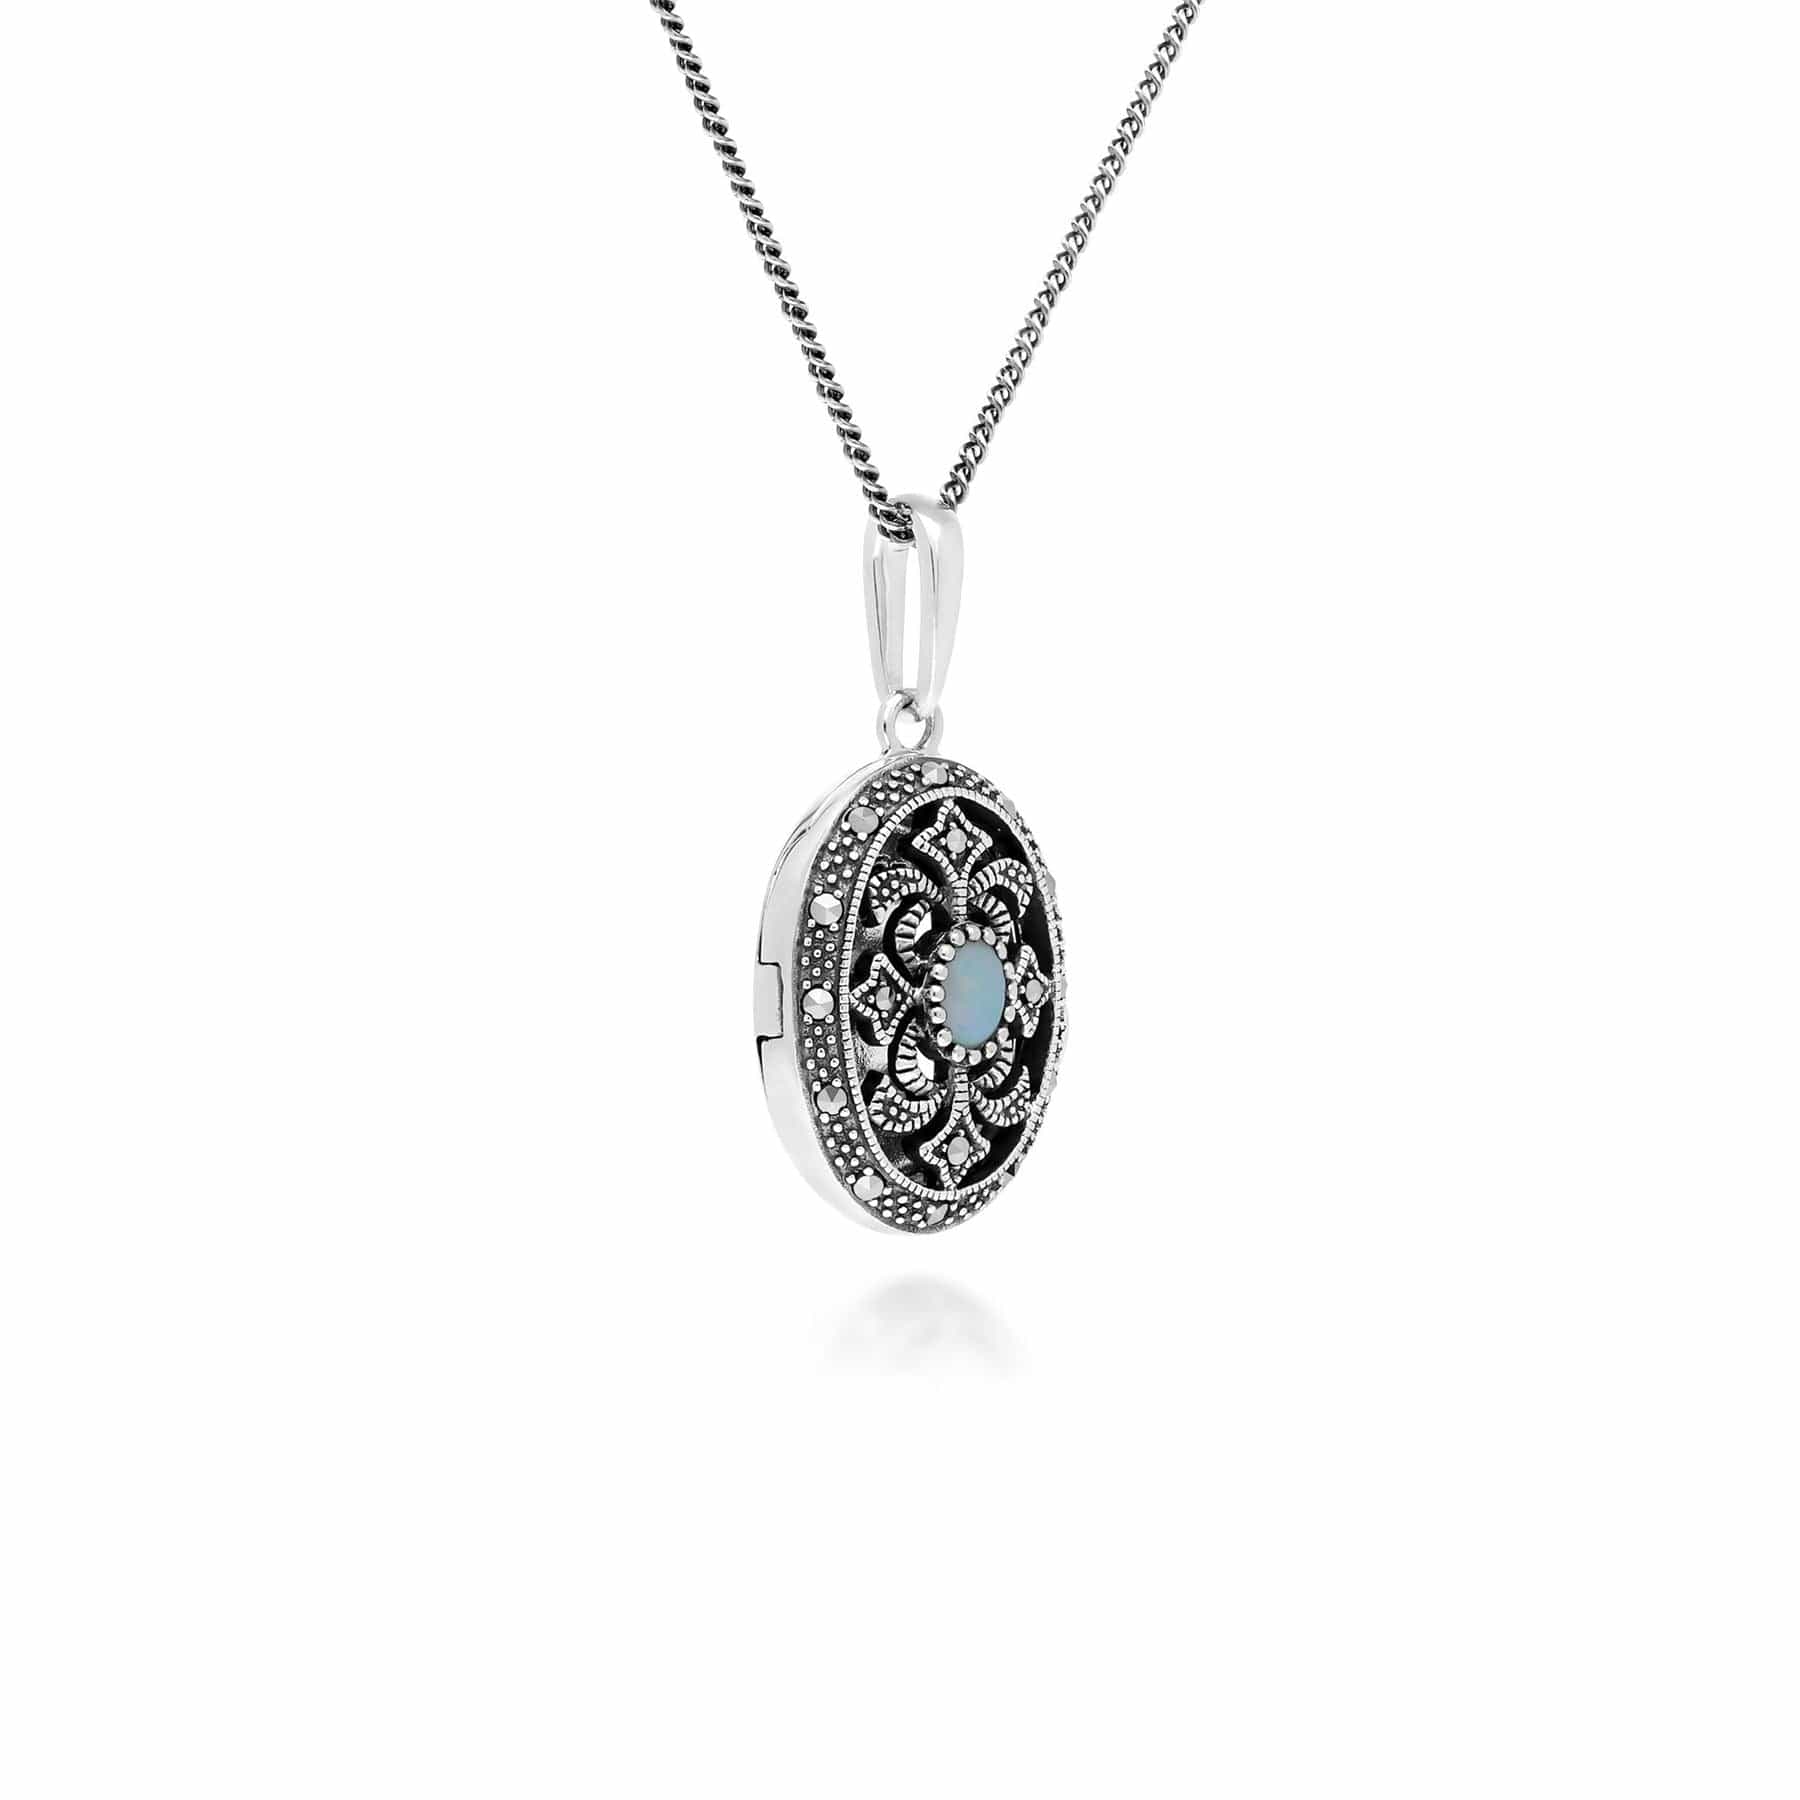 214N716212925 Art Nouveau Style Oval Opal & Marcasite Locket Necklace in 925 Sterling Silver 2